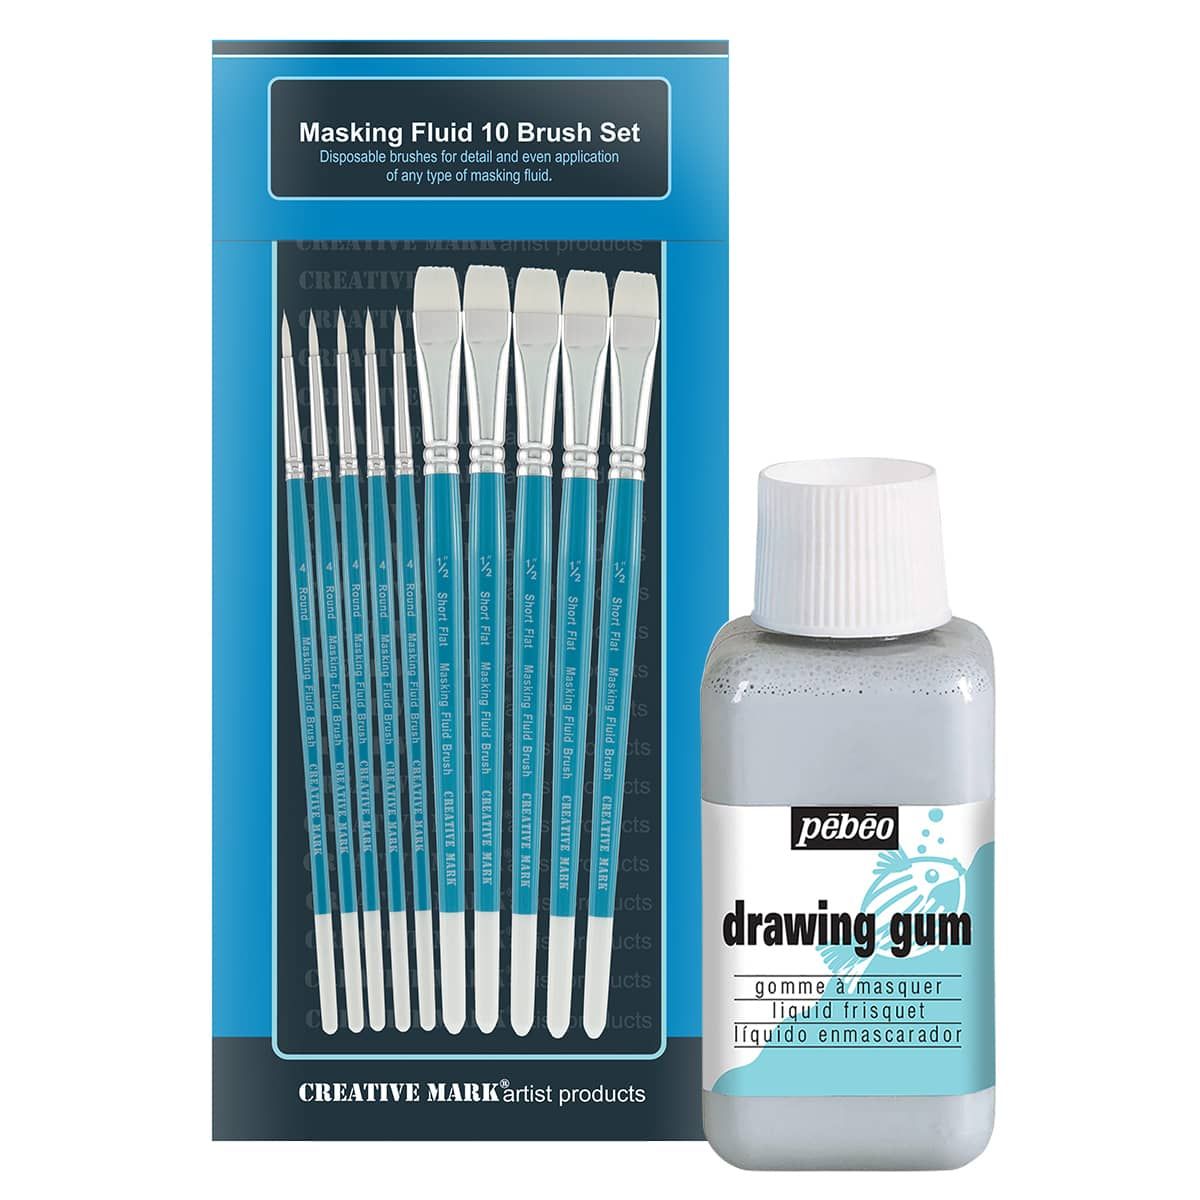 Drawing Gum, Plastic Material Masking Fluid Marker Pen For